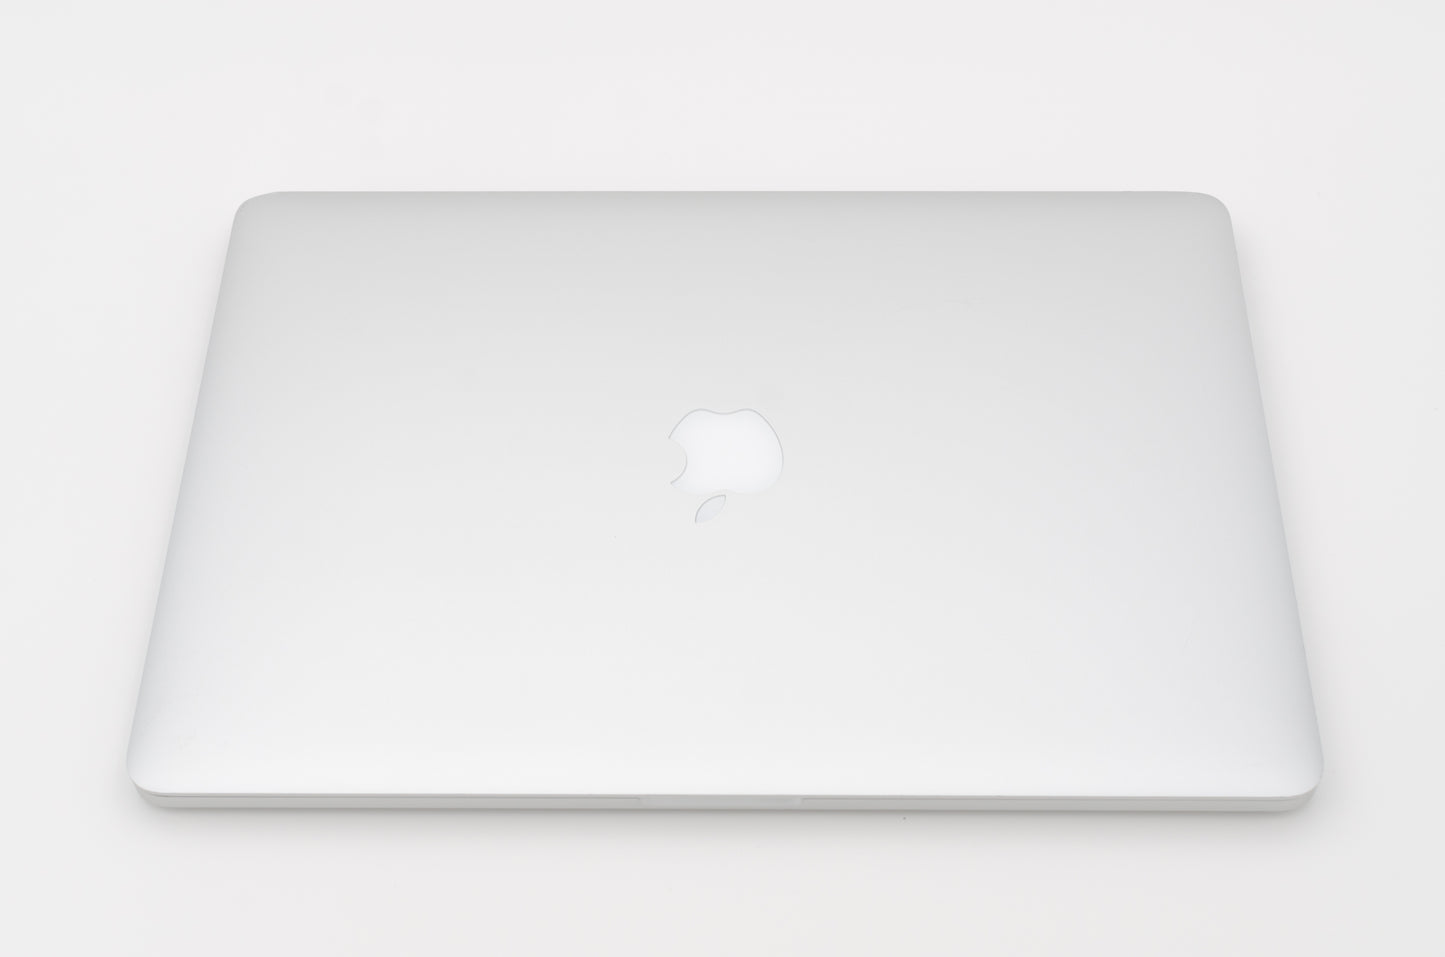 apple-mid-2009-15.4-inch-macbook-pro-a1286-aluminum-c2d - 2.53ghz processor, 4gb ram, 9400m gt - 256mb gpu-mc118ll/a-3